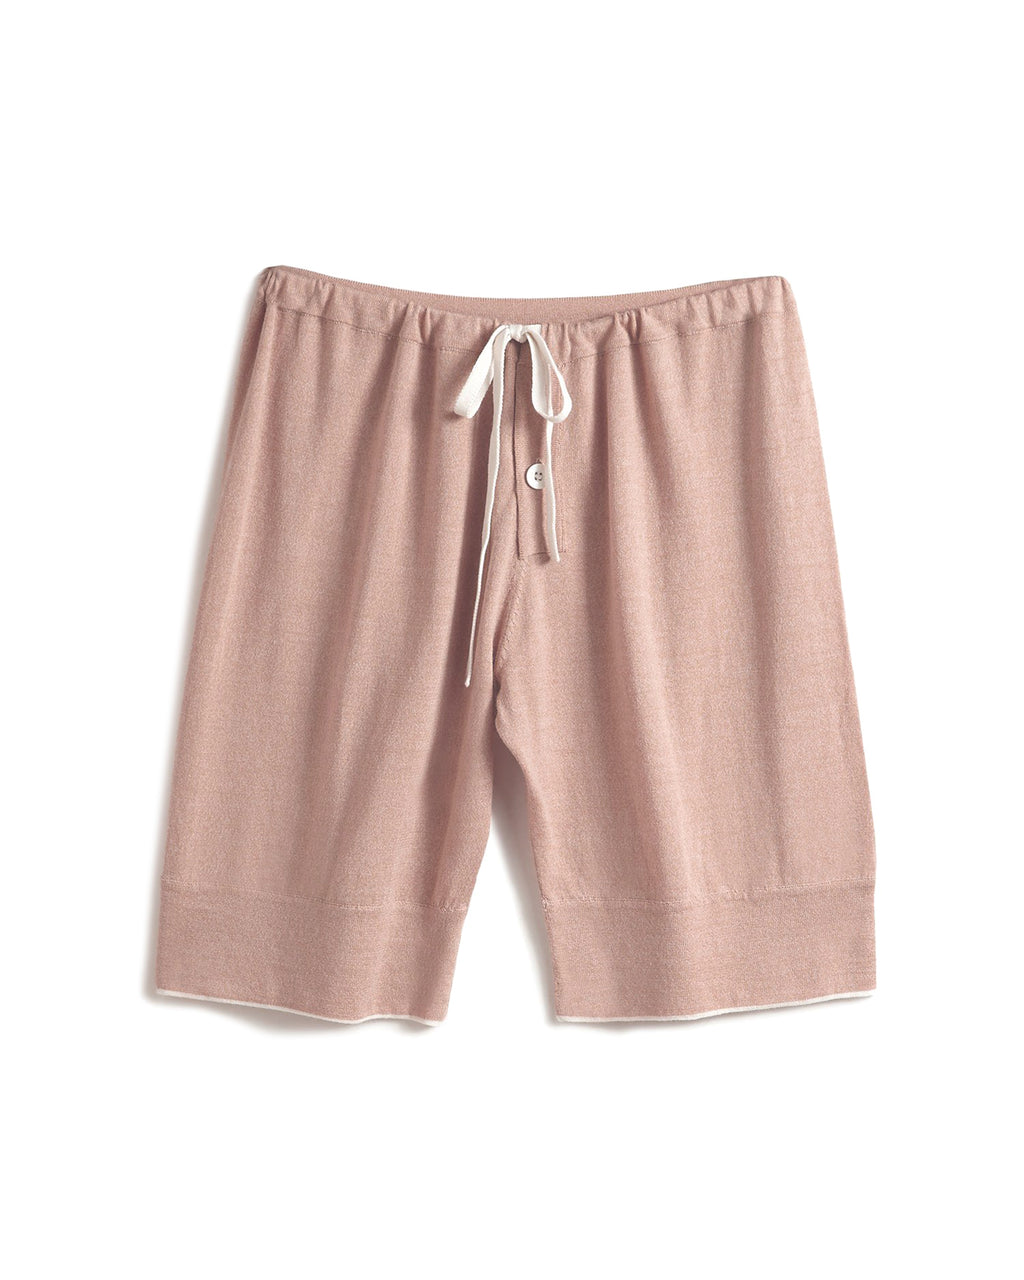 Terry underside lounge shorts, Miiyu, Shop Women's Sleep Shorts Online